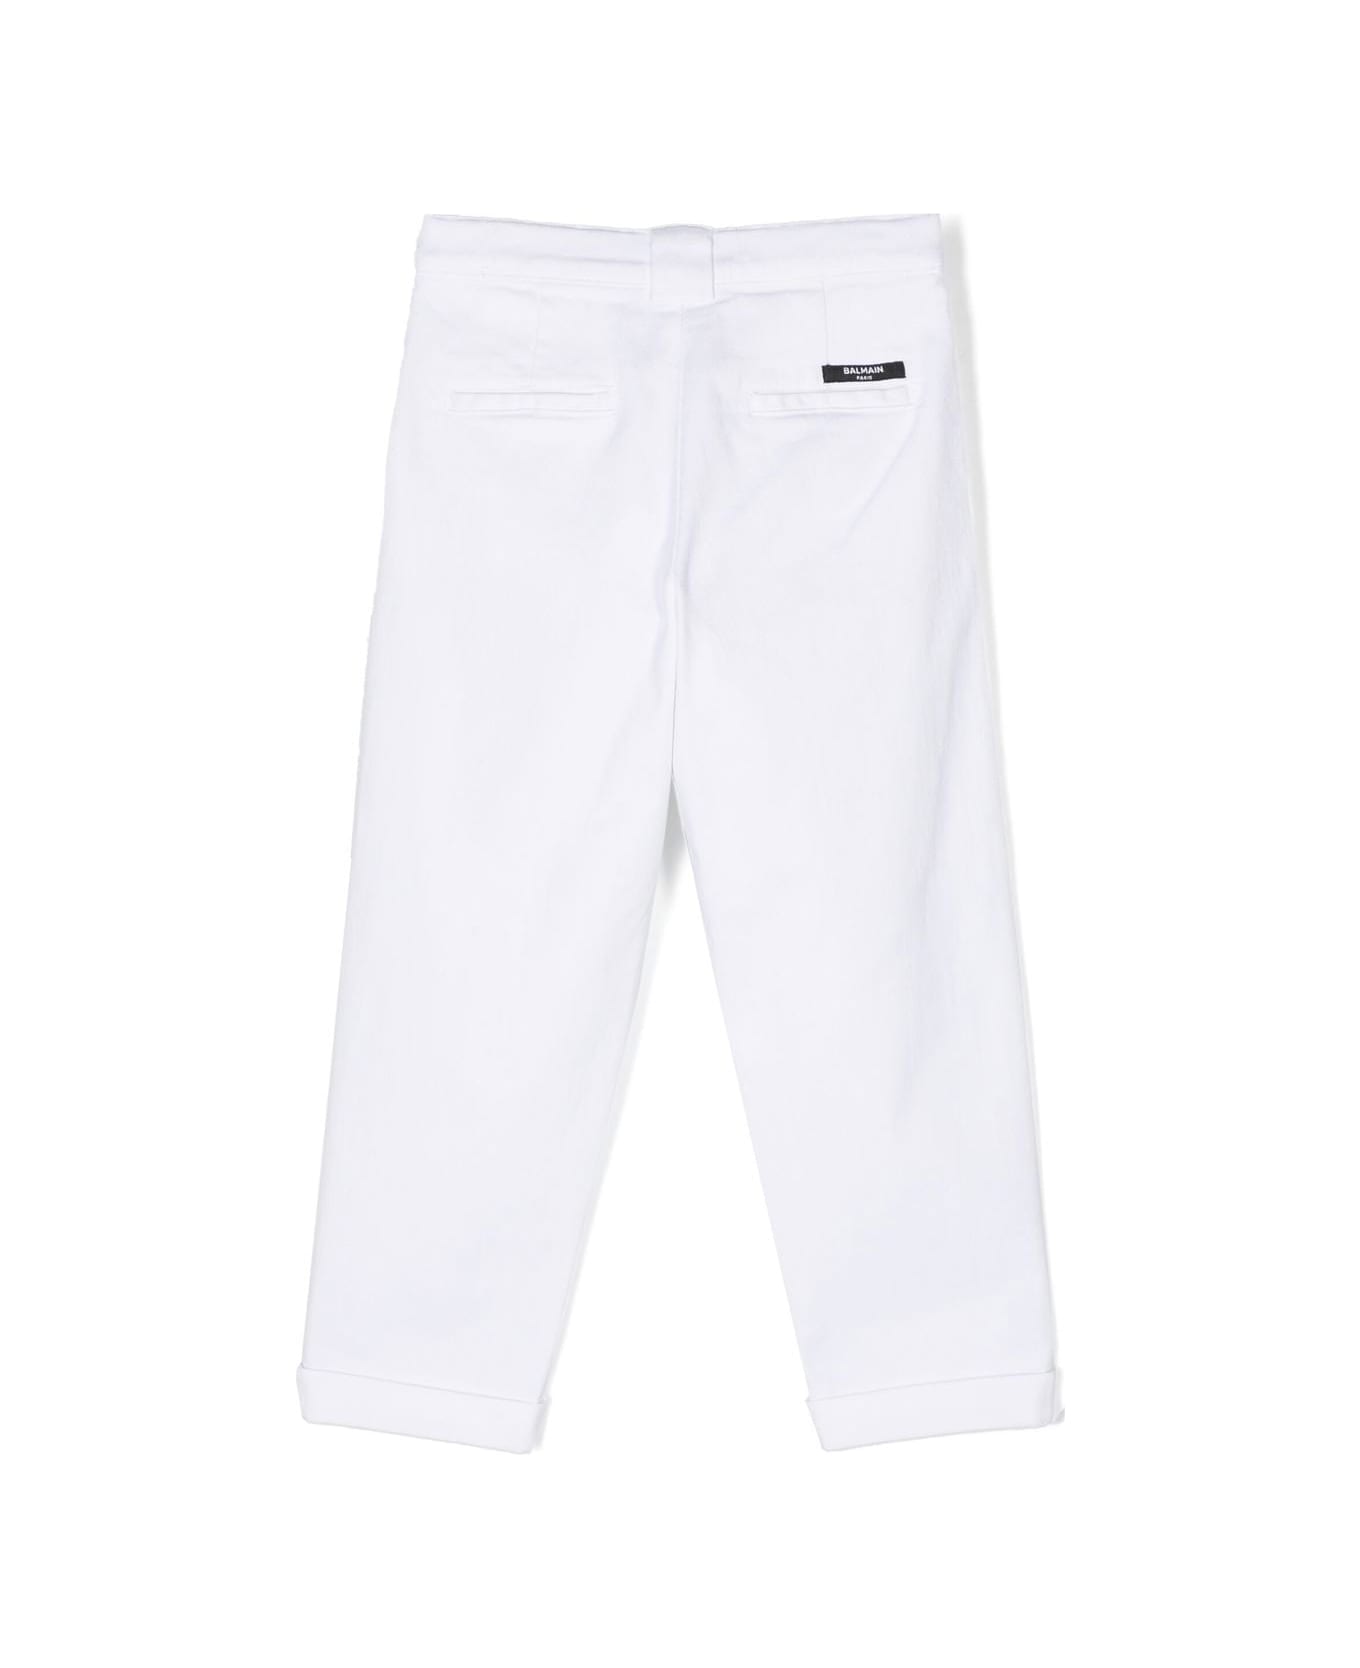 Balmain White Cotton Pants - White ボトムス